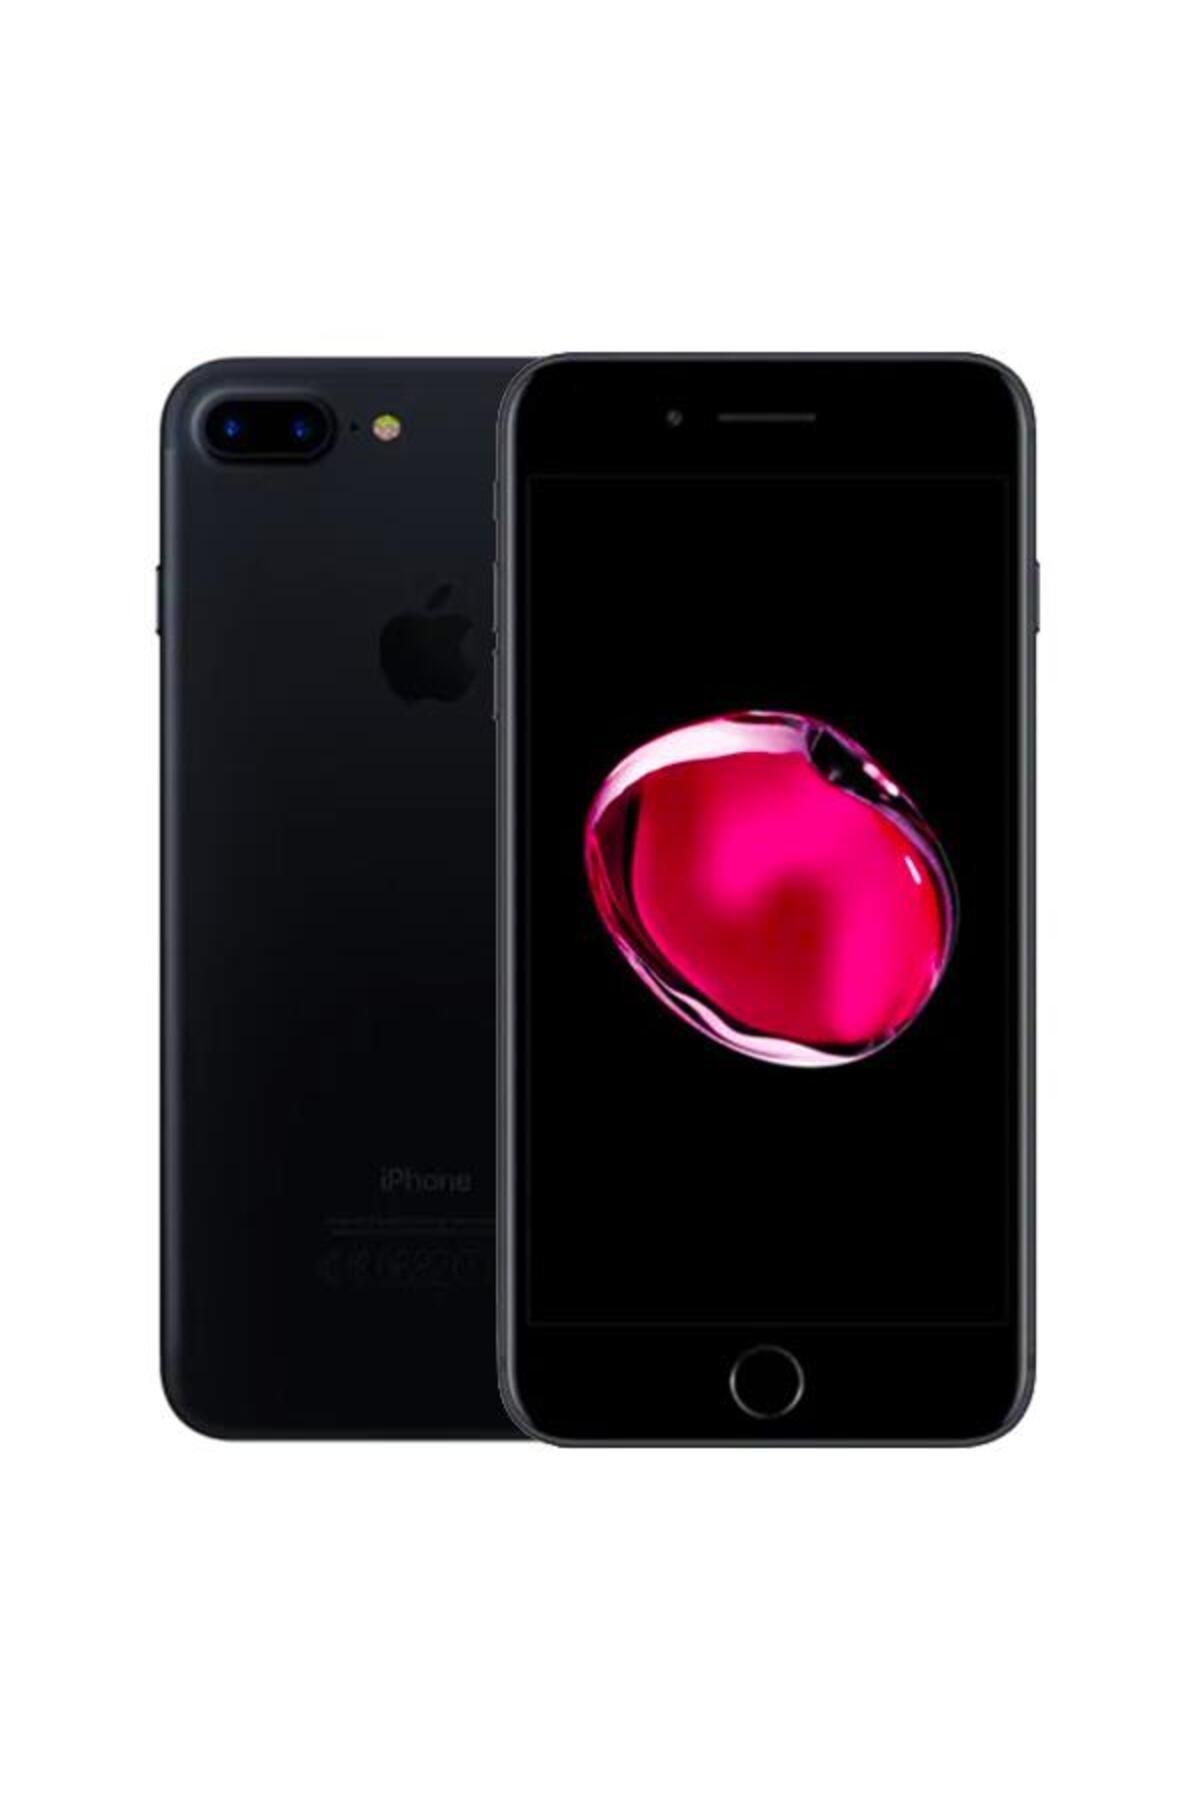 Apple Yenilenmiş Iphone 7 Plus Black 32gb A Kalite (12 AY GARANTİLİ)